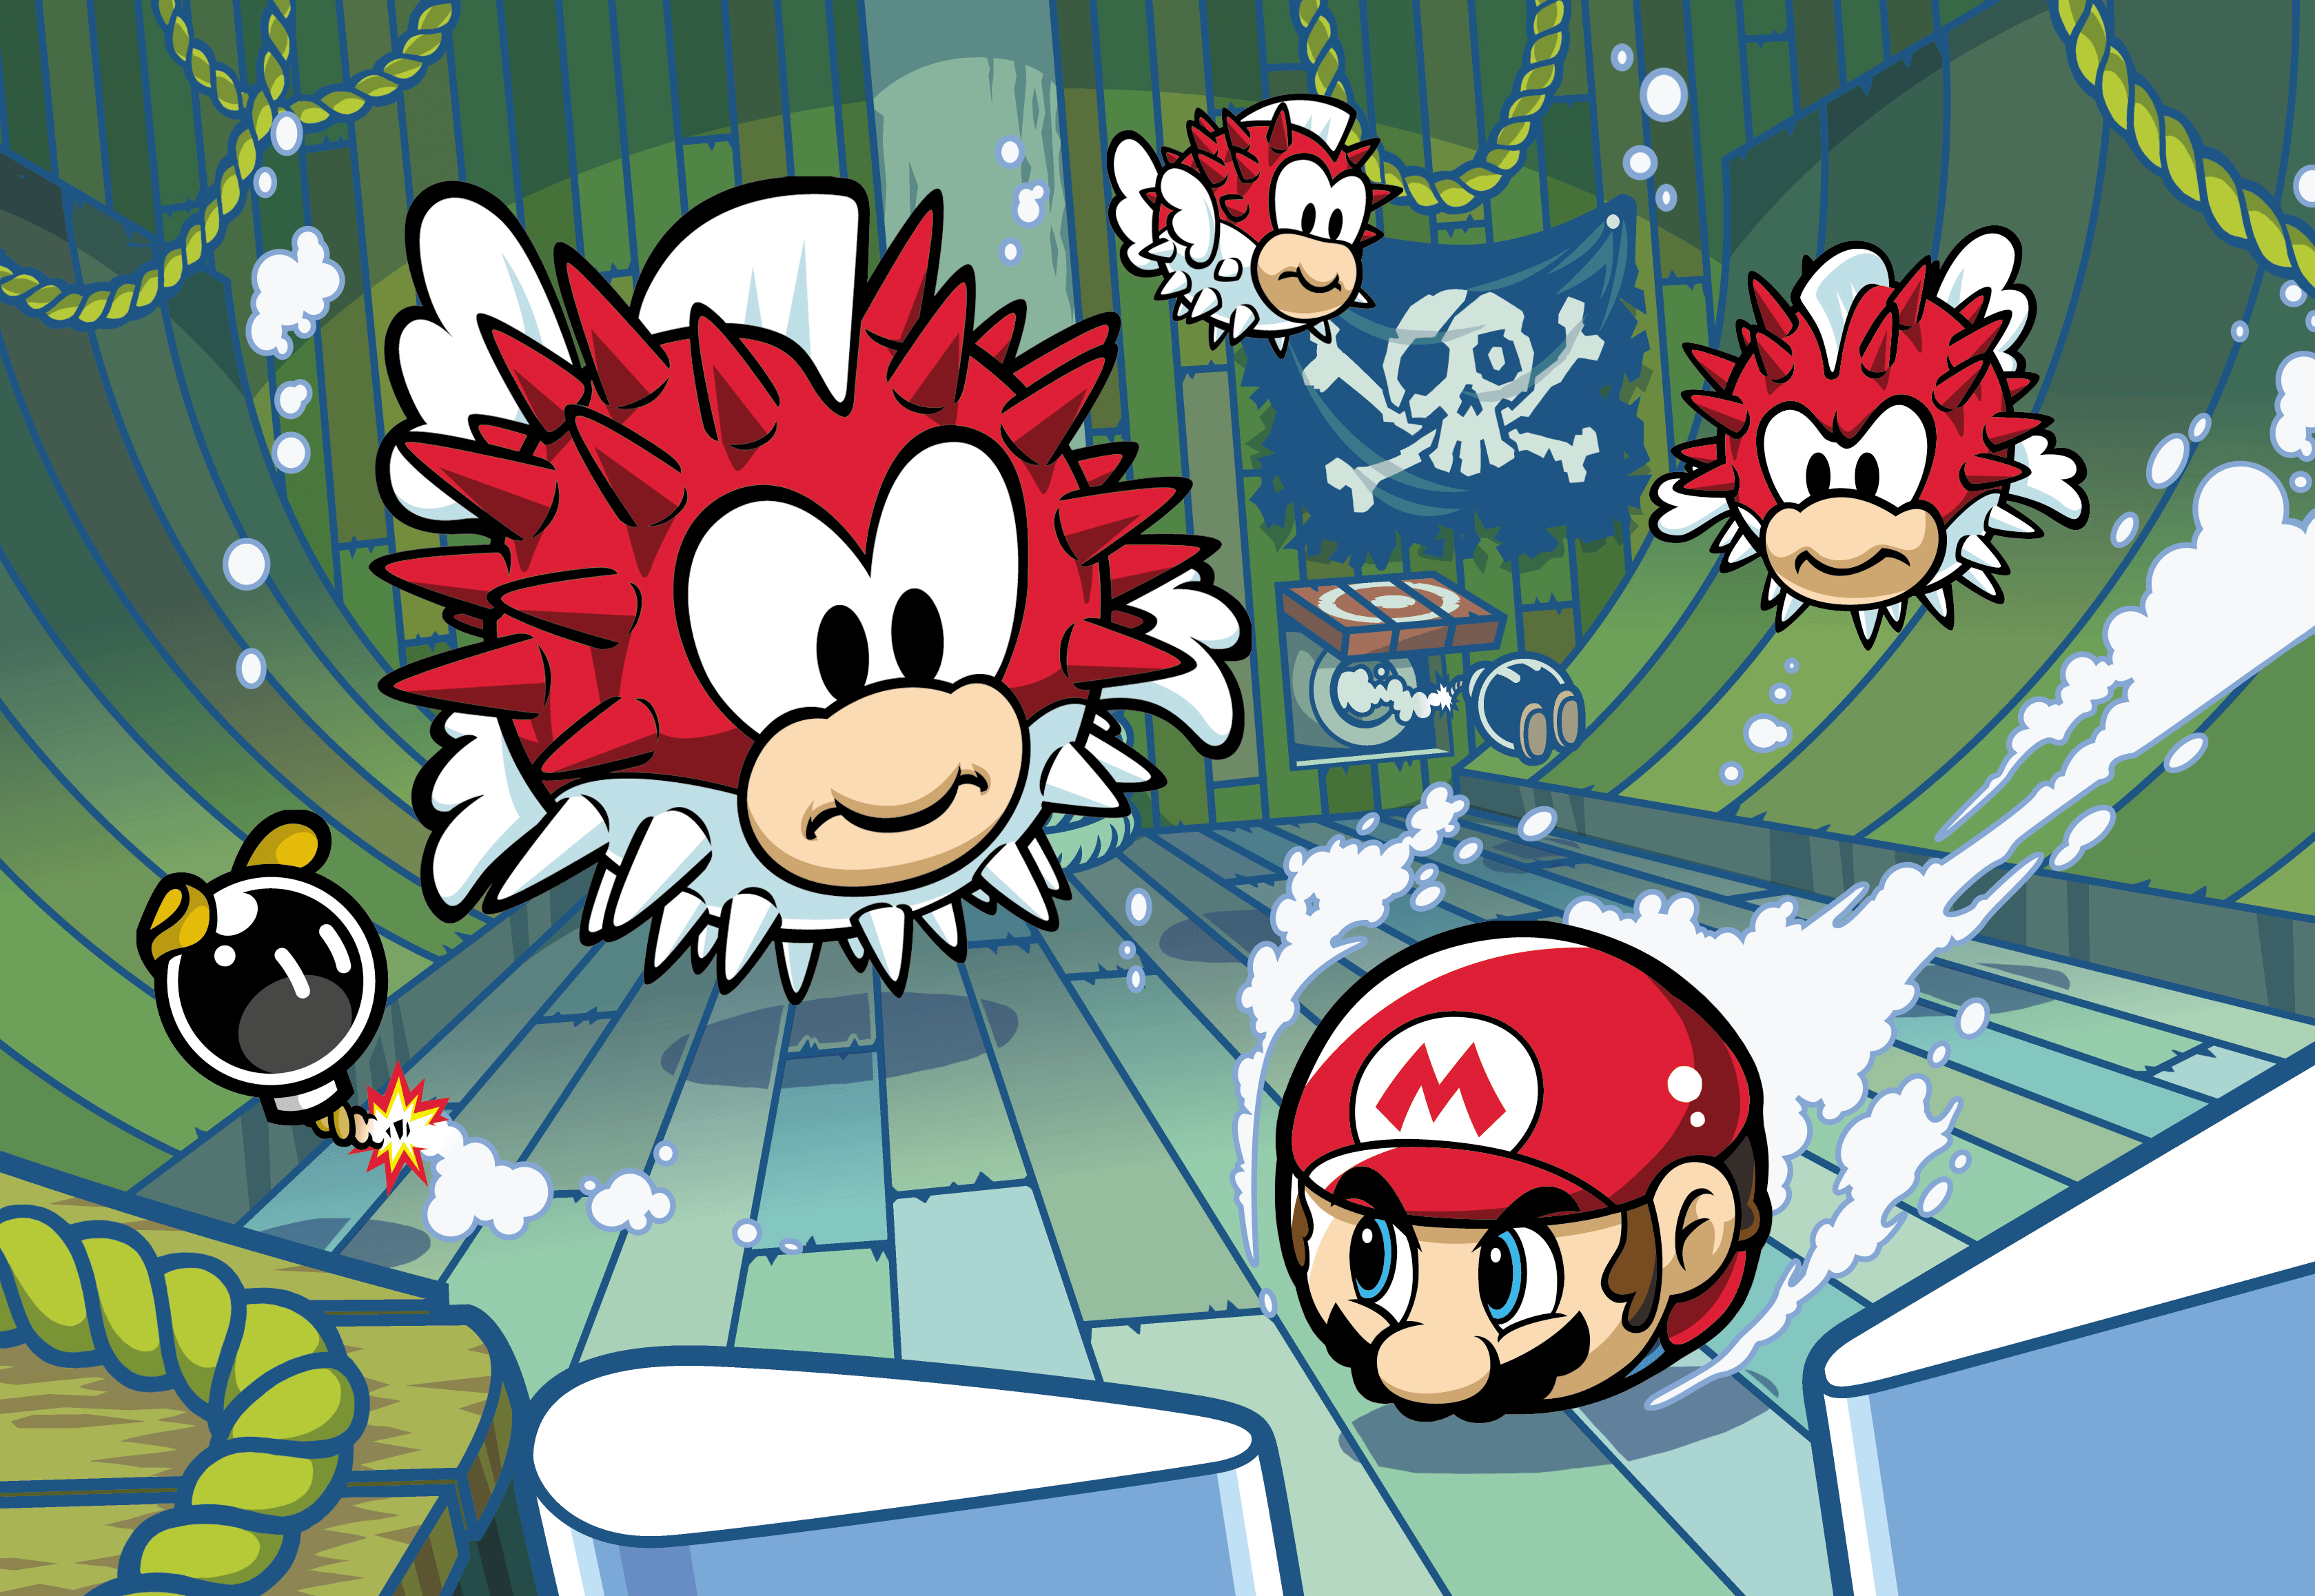 An artwork of Pinball Mario facing off vs Pufferfish